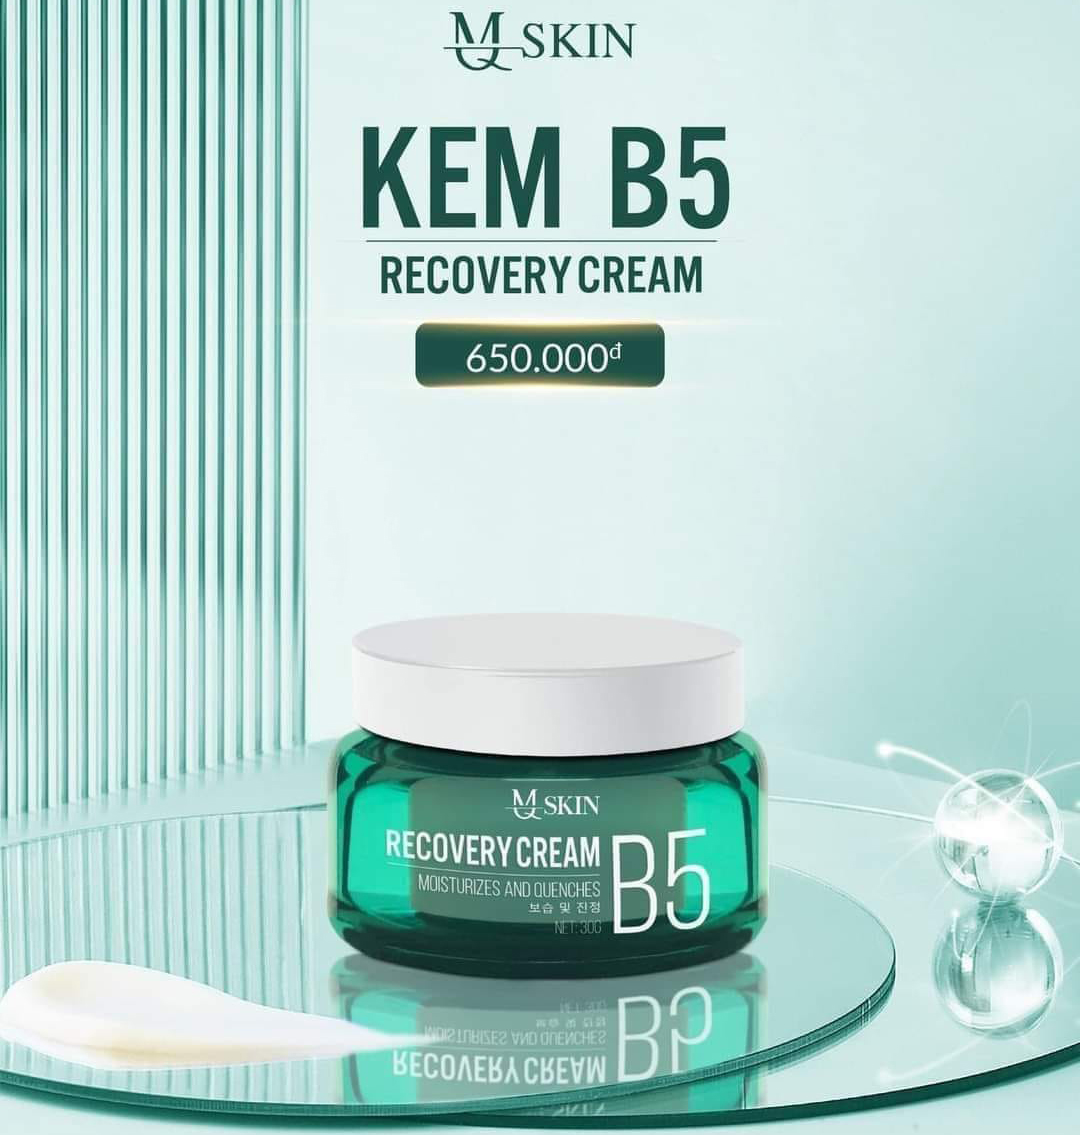 Kem B5 MQ Skin - Recovery Cream